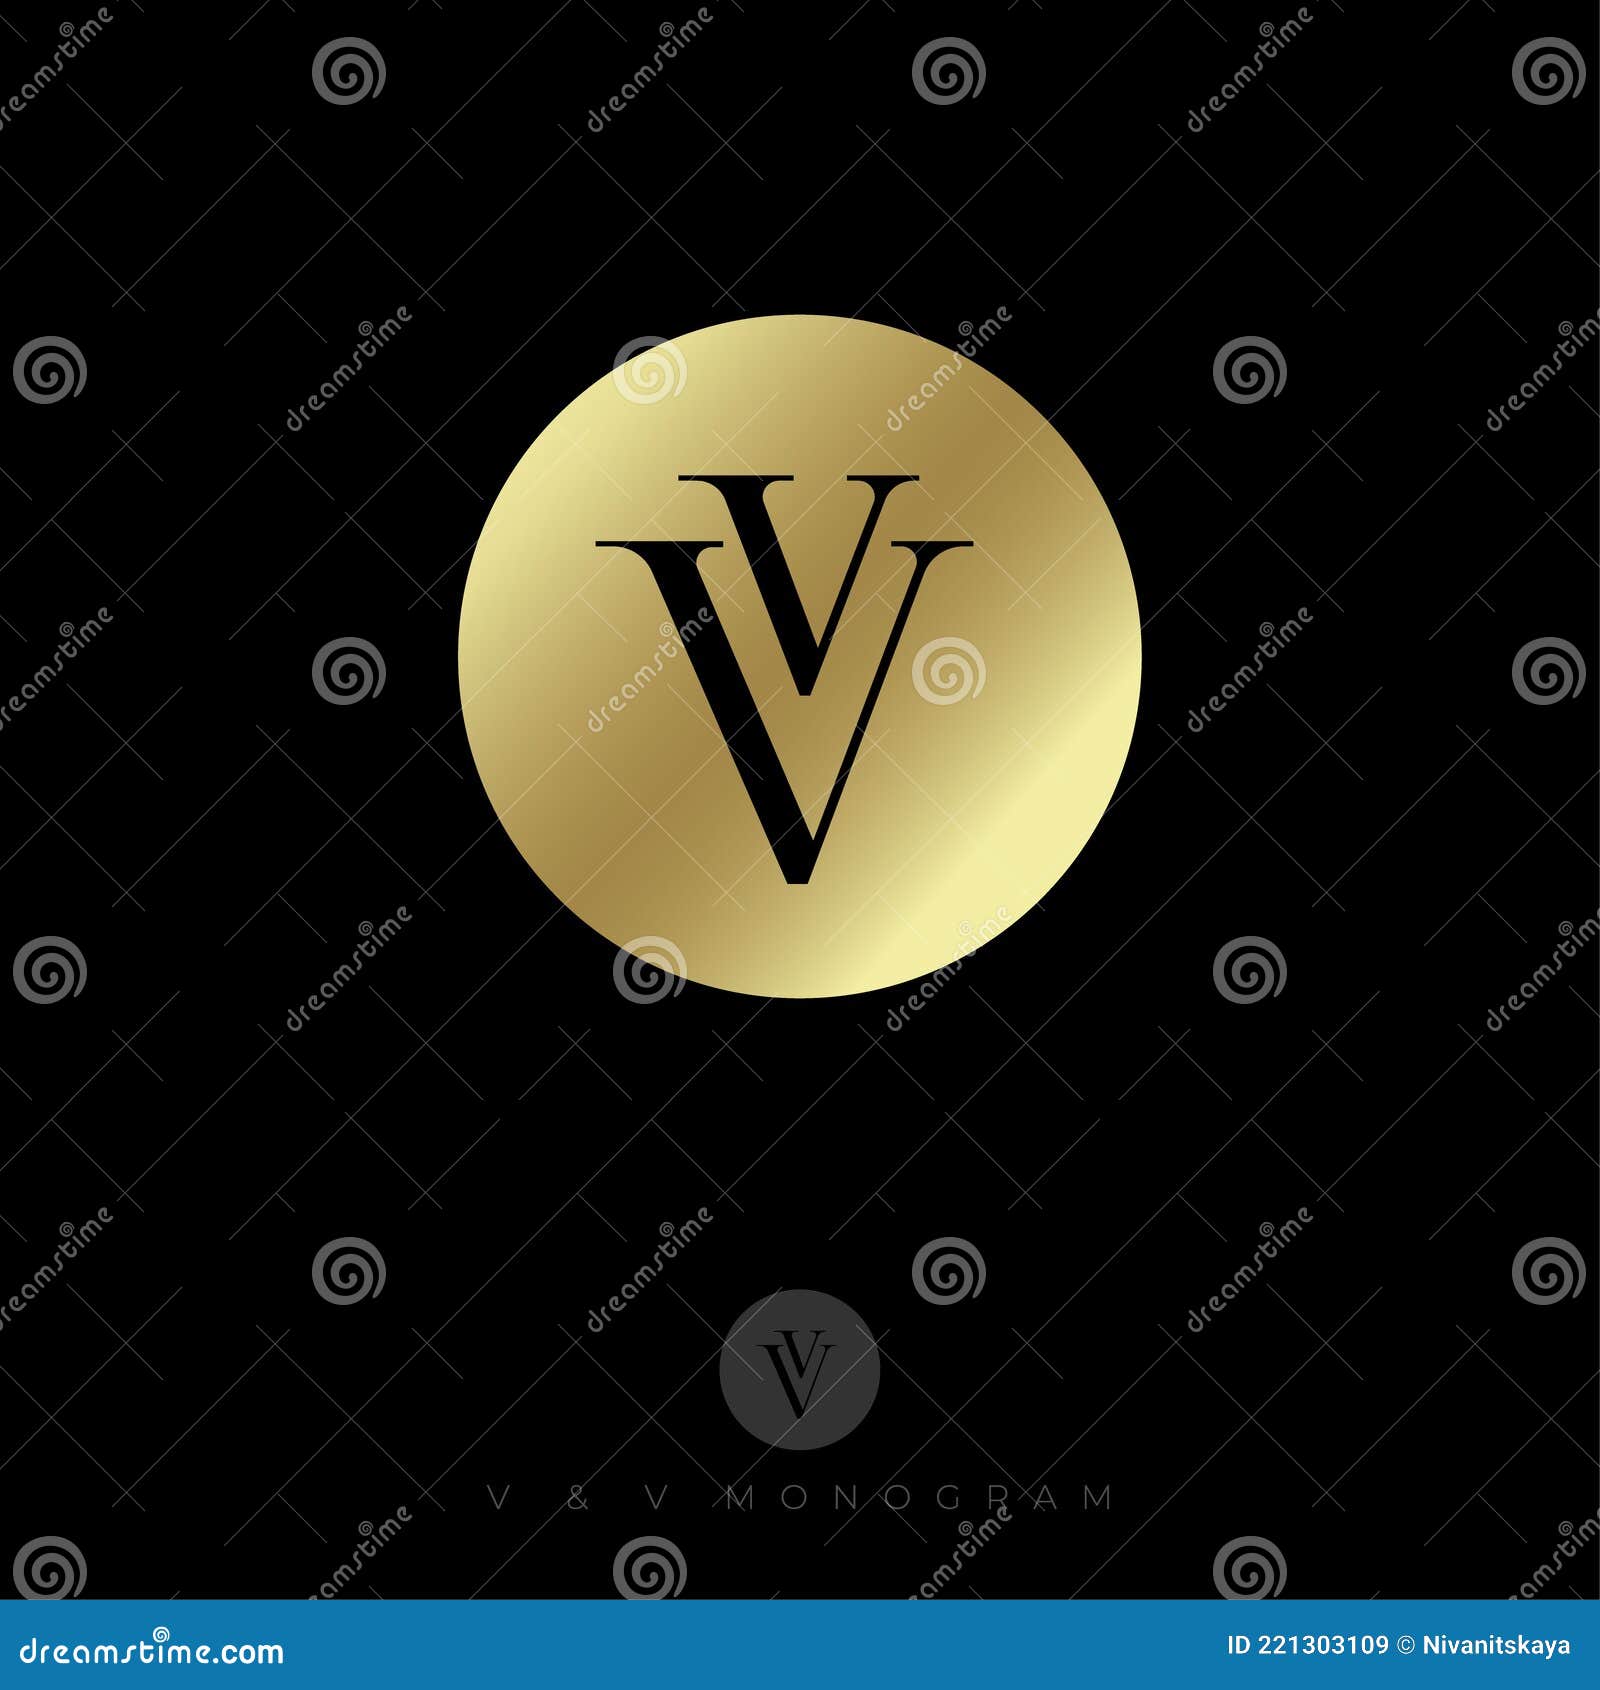 Premium pm logo monogram with gold circle frame Vector Image